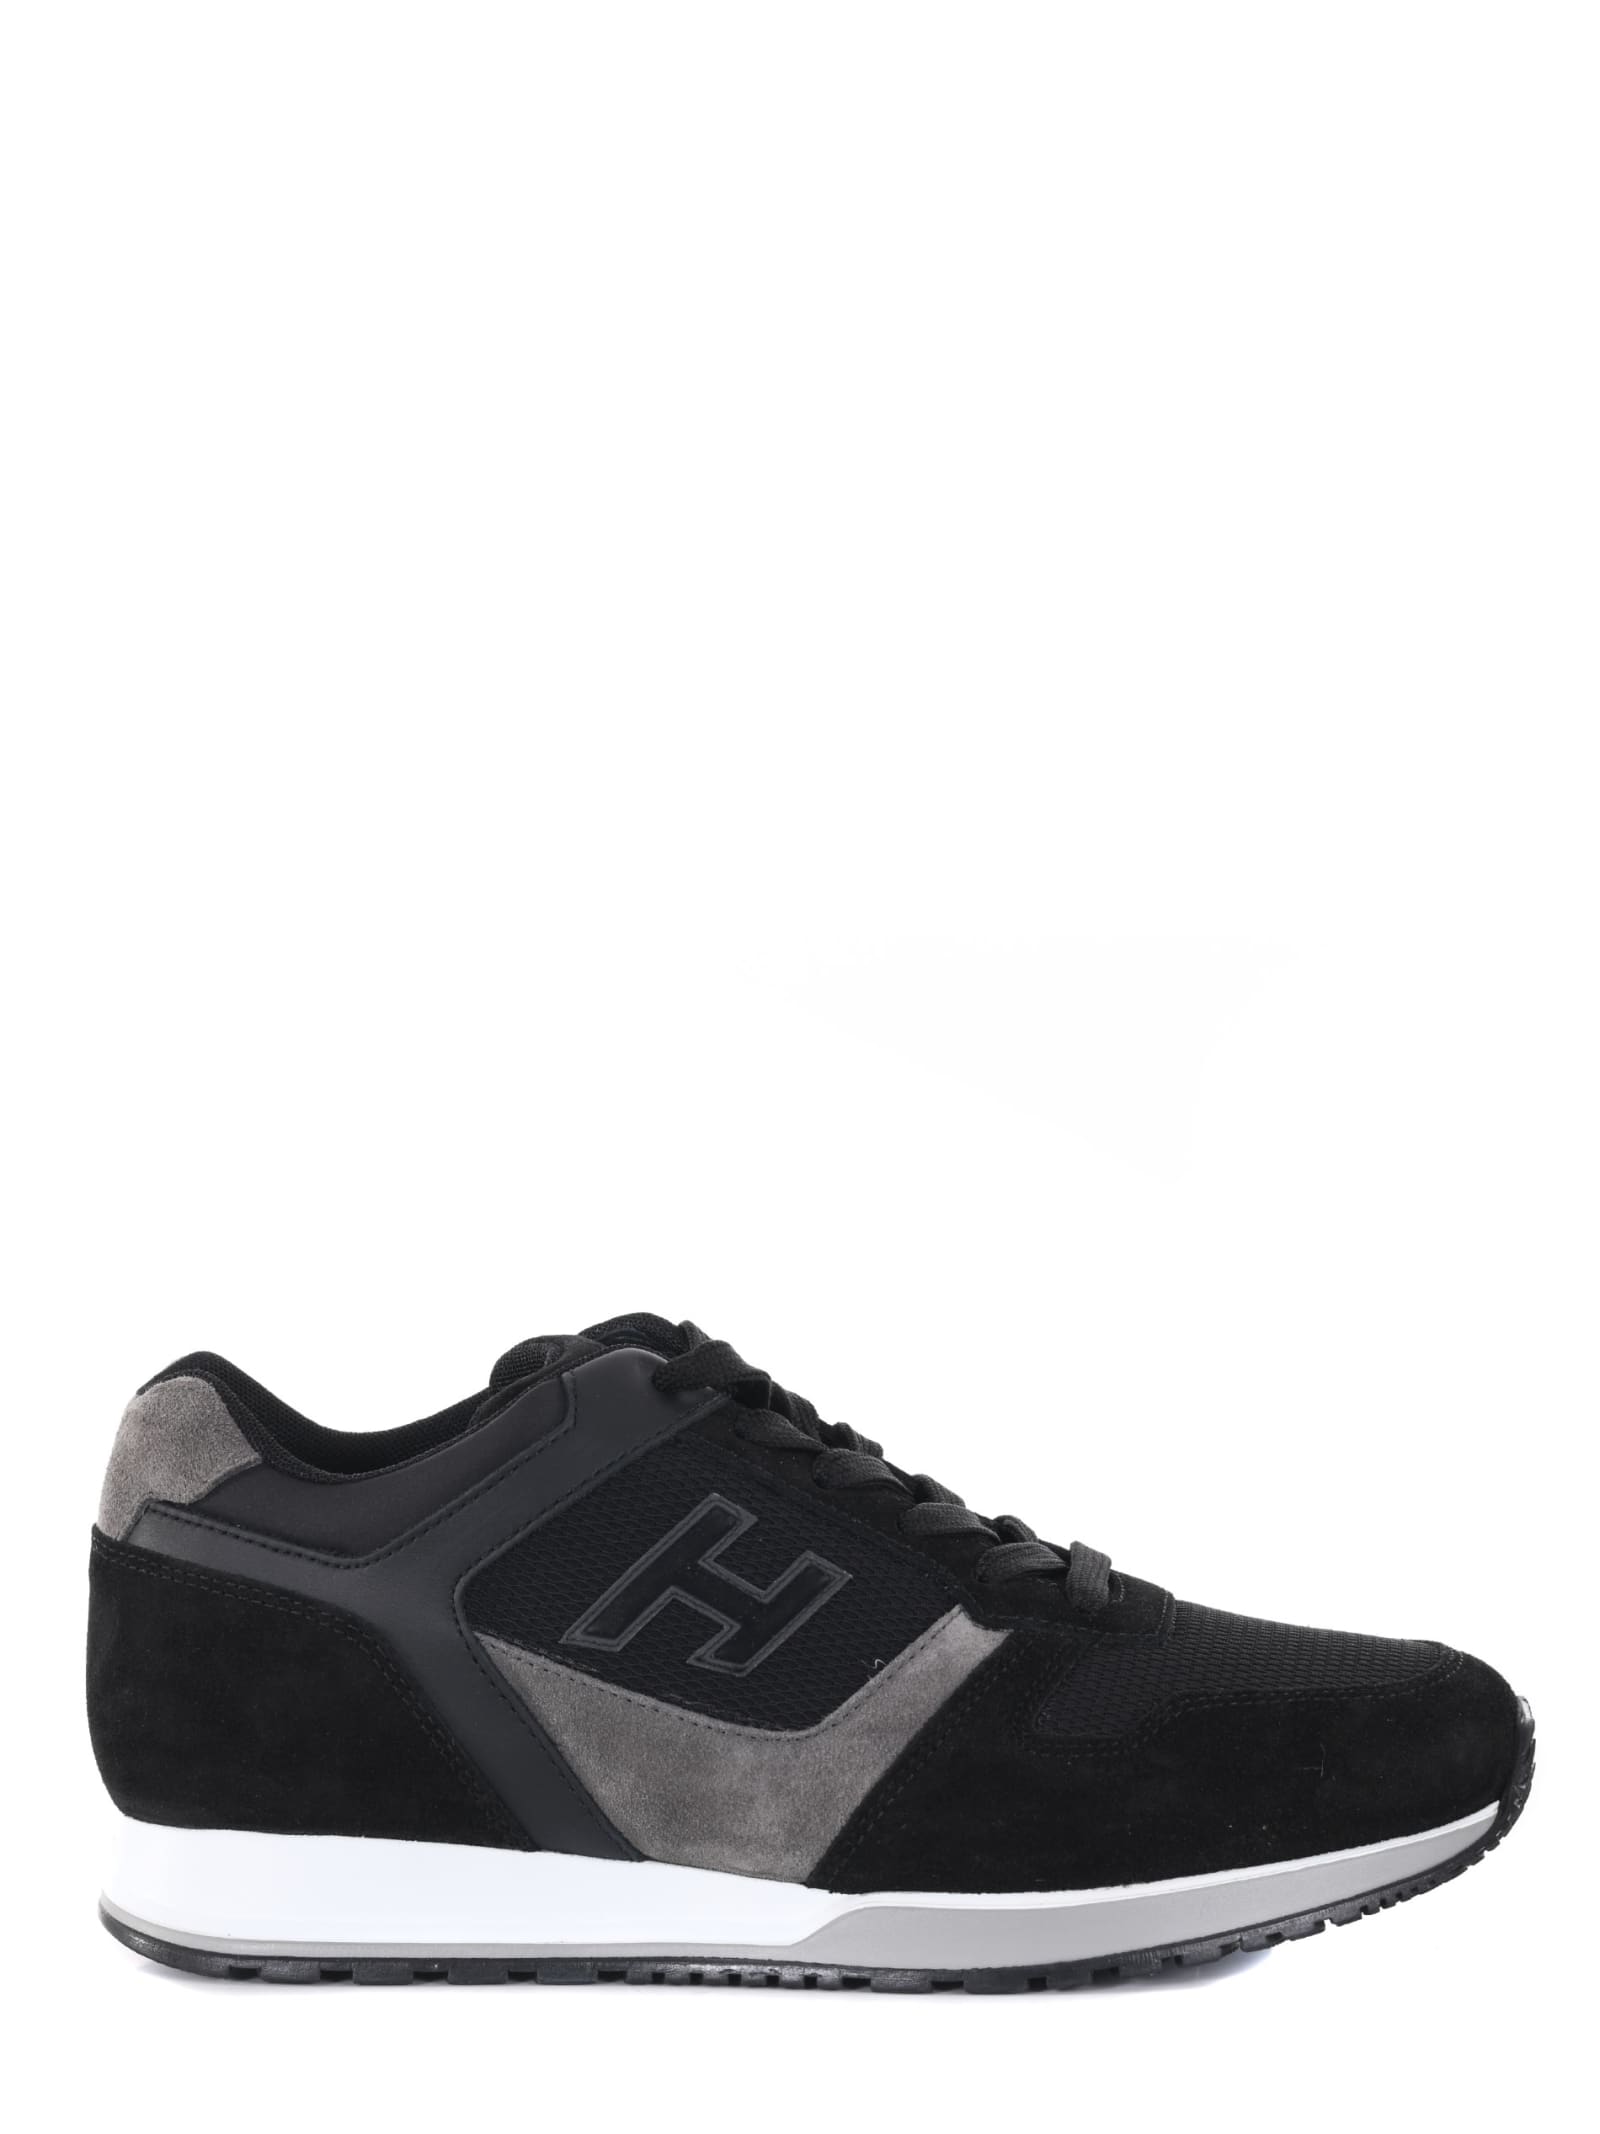 Sneakers Uomo Hogan h321 In Pelle Scamosciata E Nylon